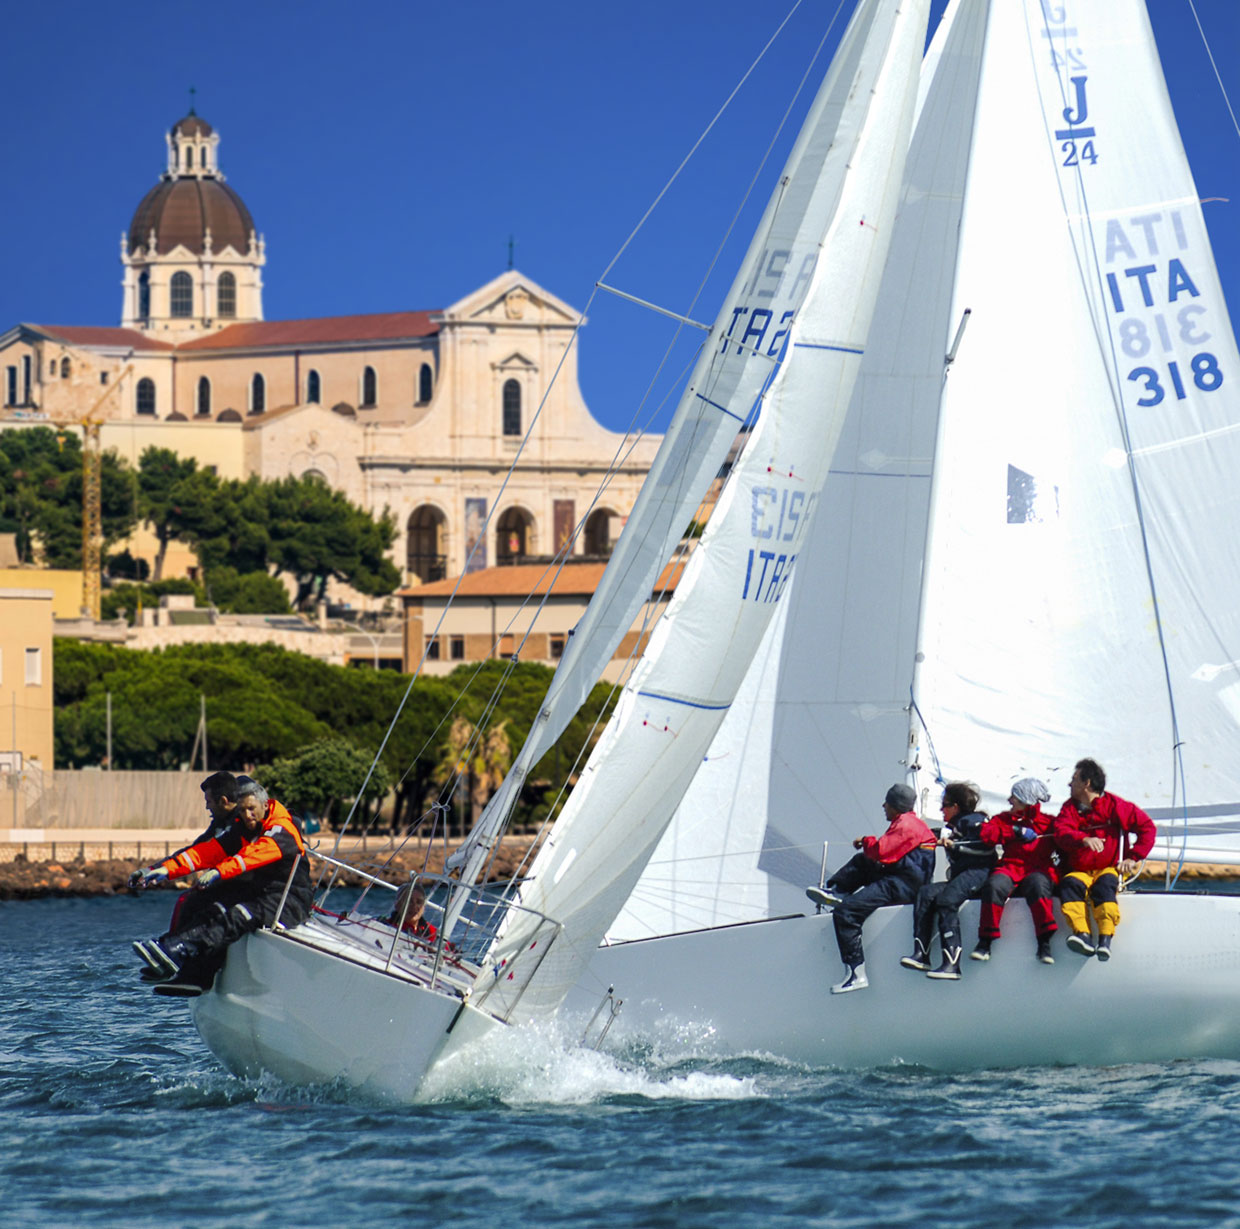 YCCS team at the Invitational Rotary Team Racing Regatta 2022 - NEWS - Yacht Club Costa Smeralda